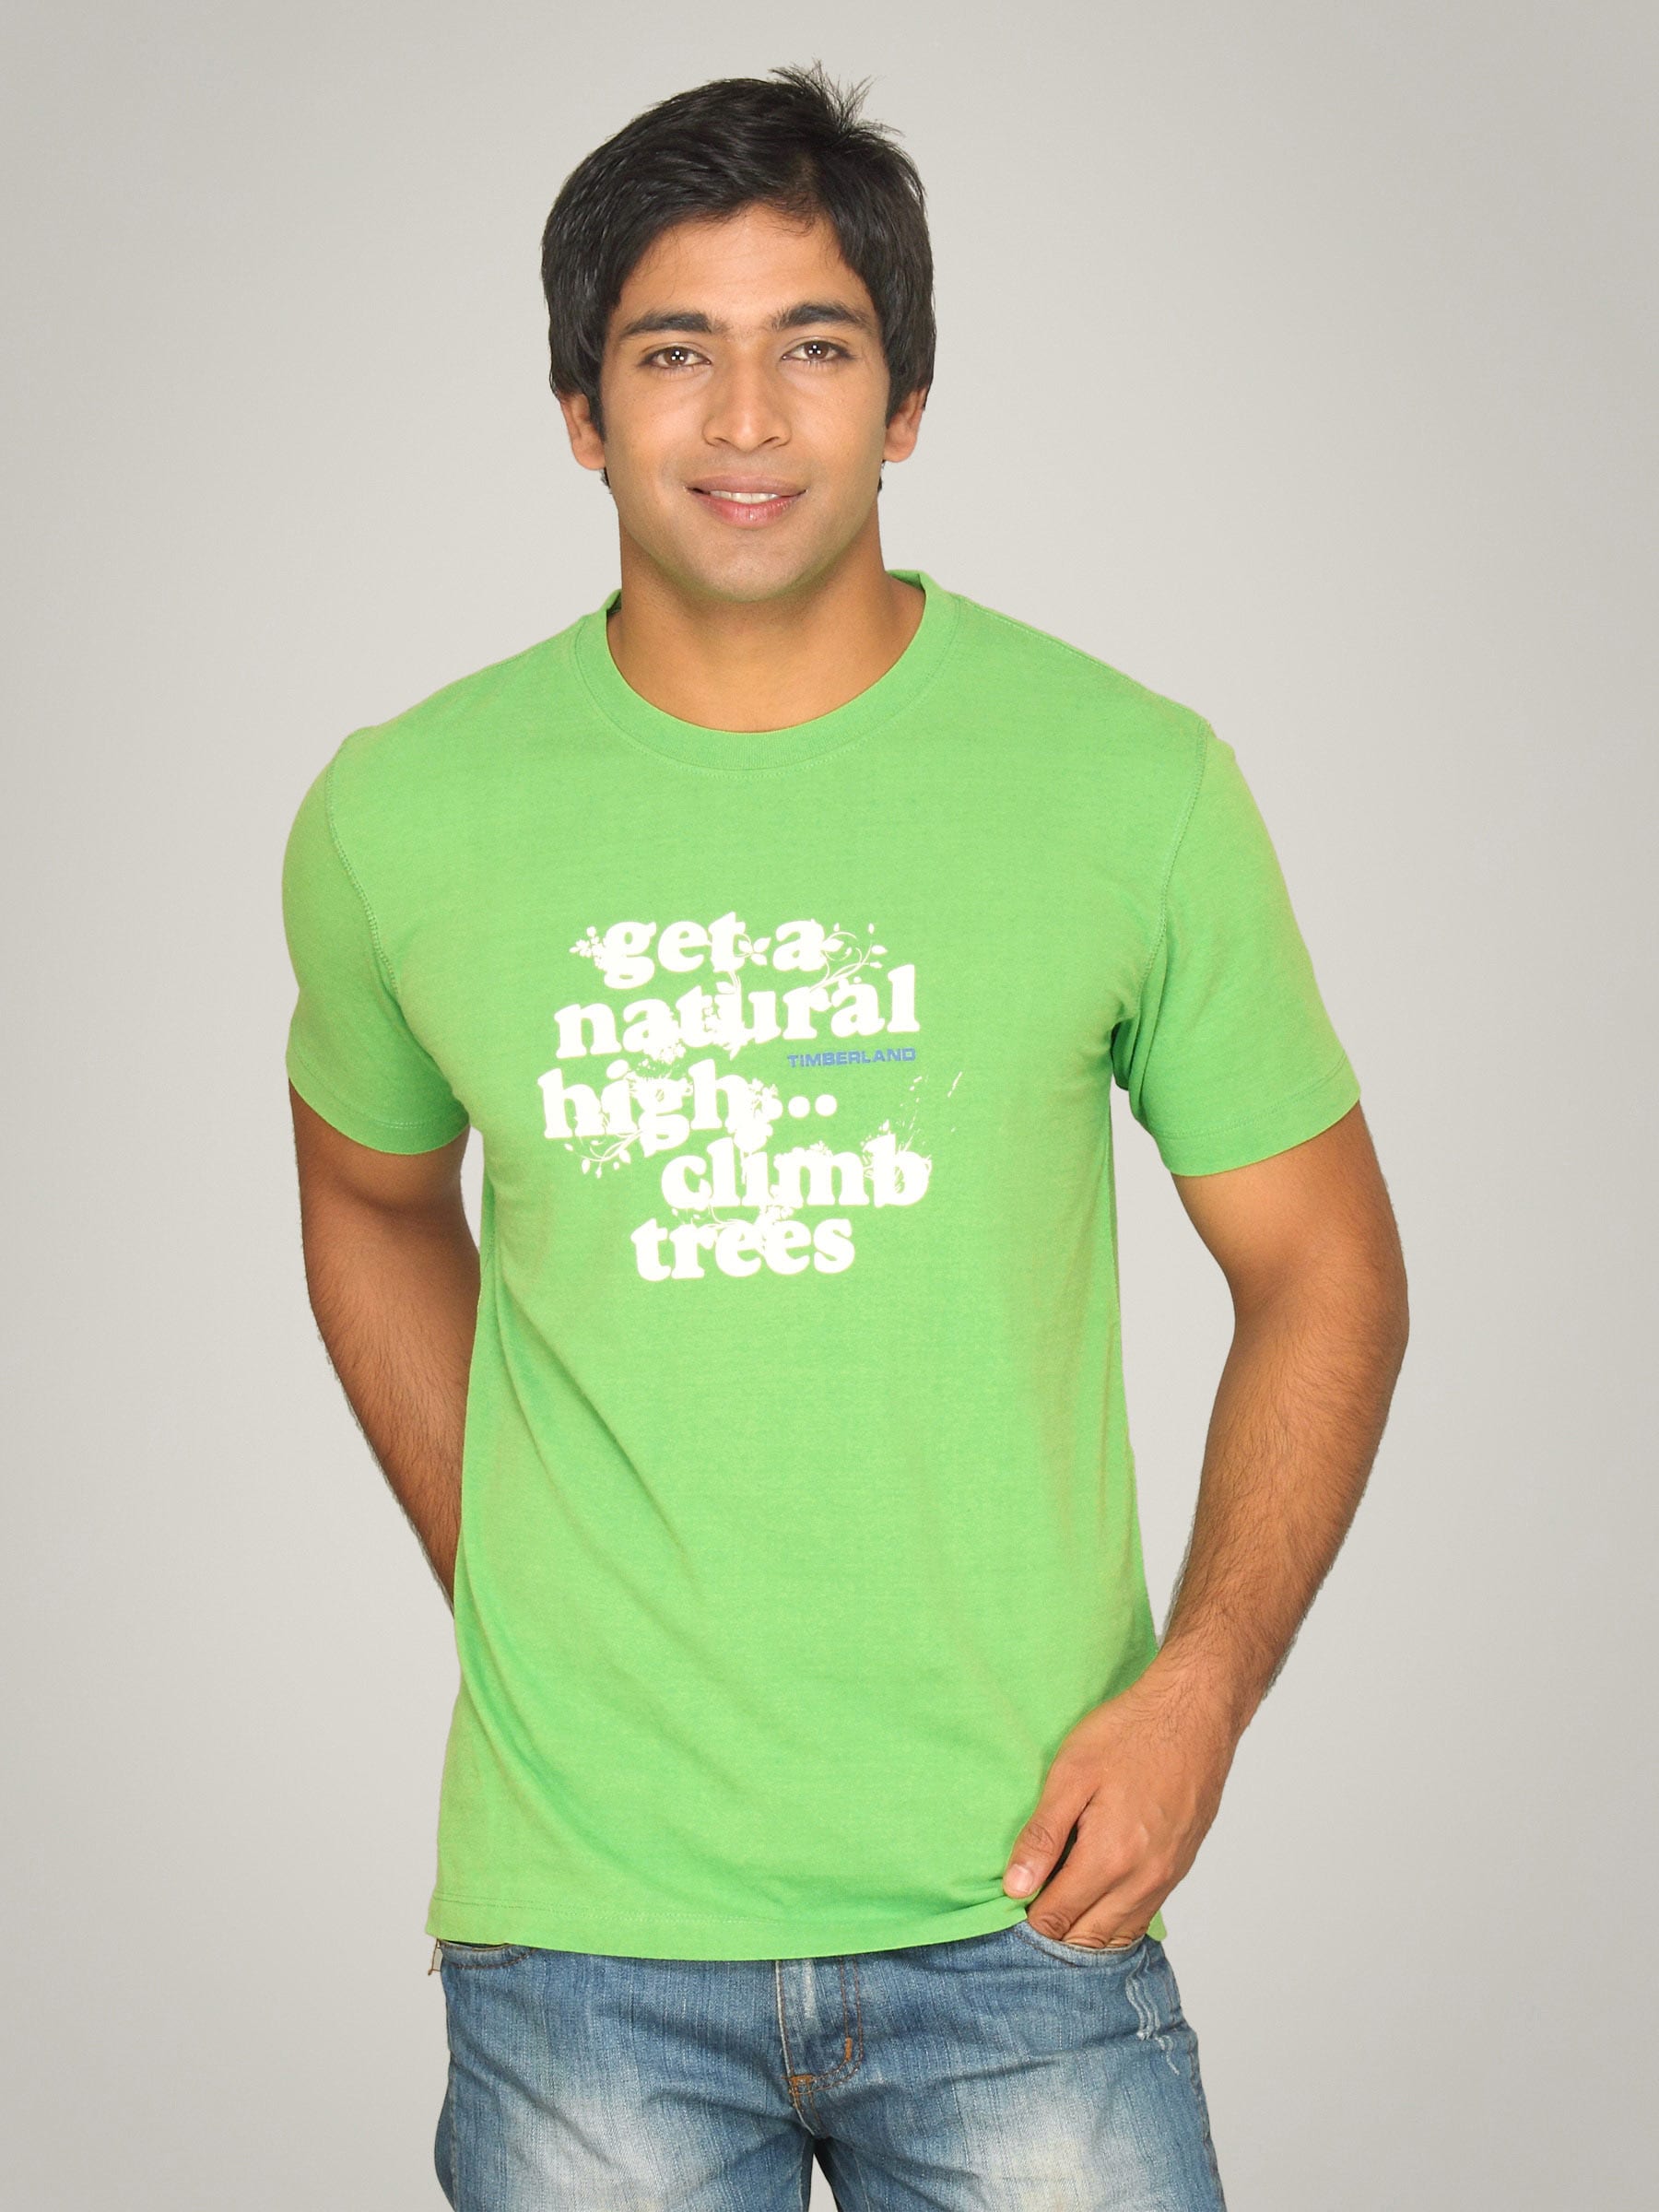 Timberland Men's Eclectic Apple Green T-shirt